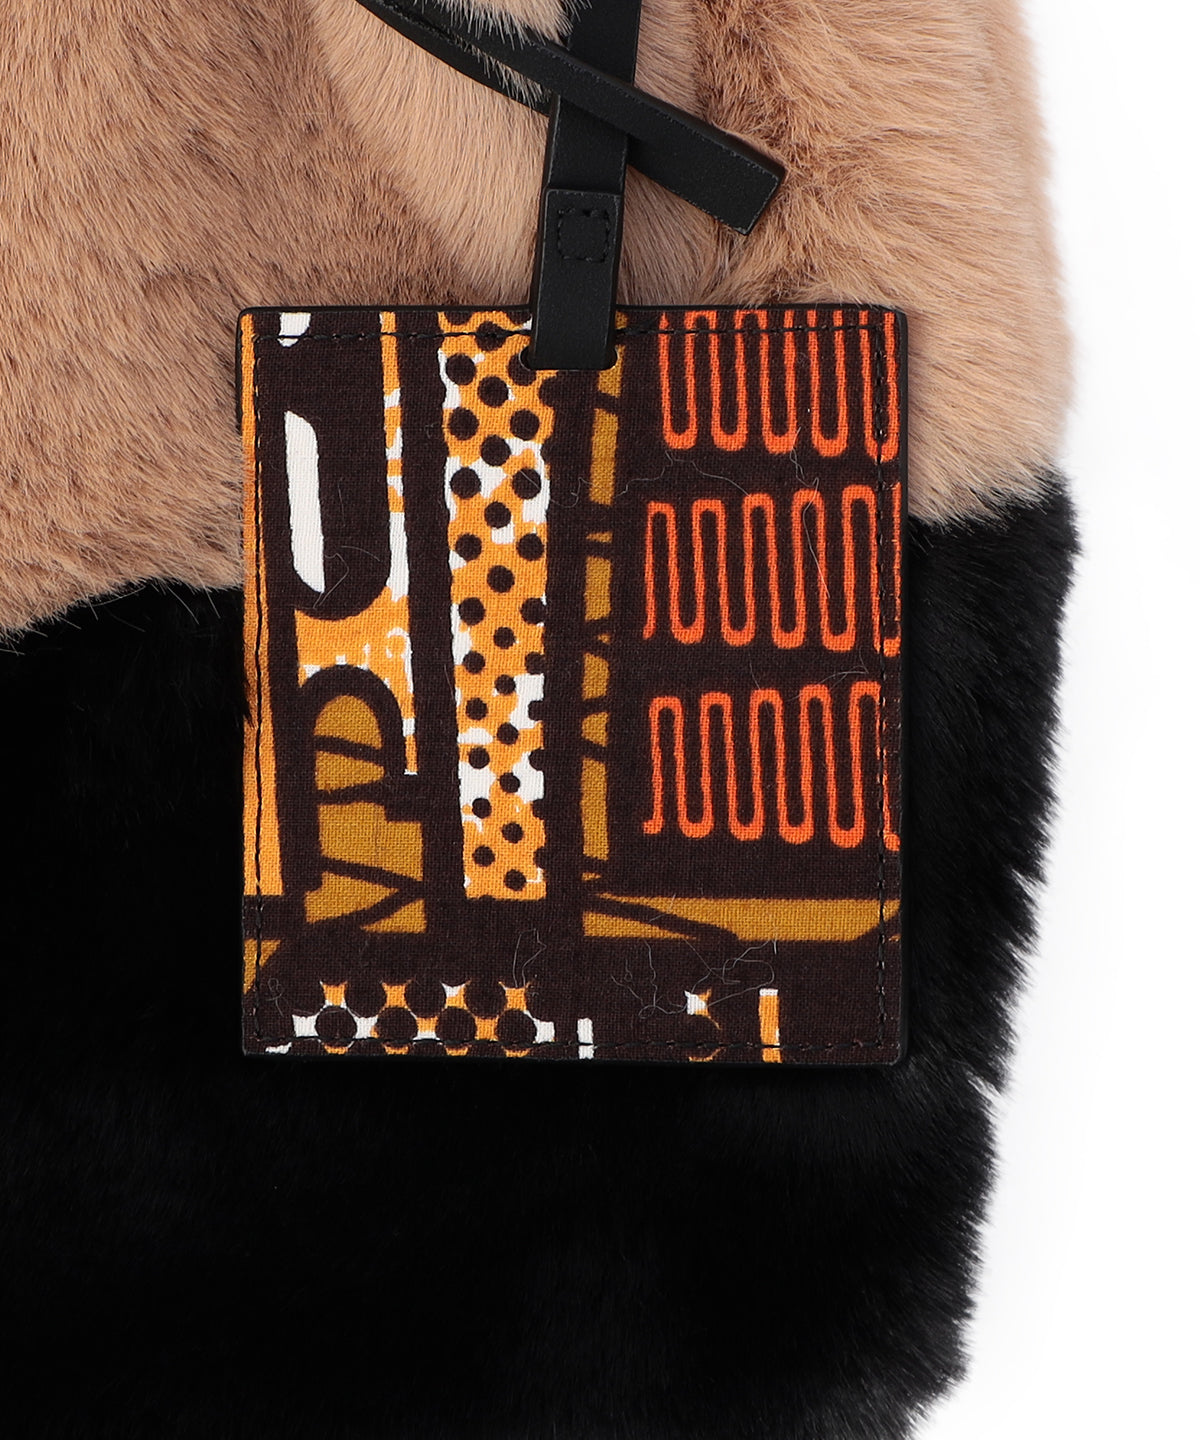 Eco Fur Convenience Bag (Small) BEIGE×BLACK